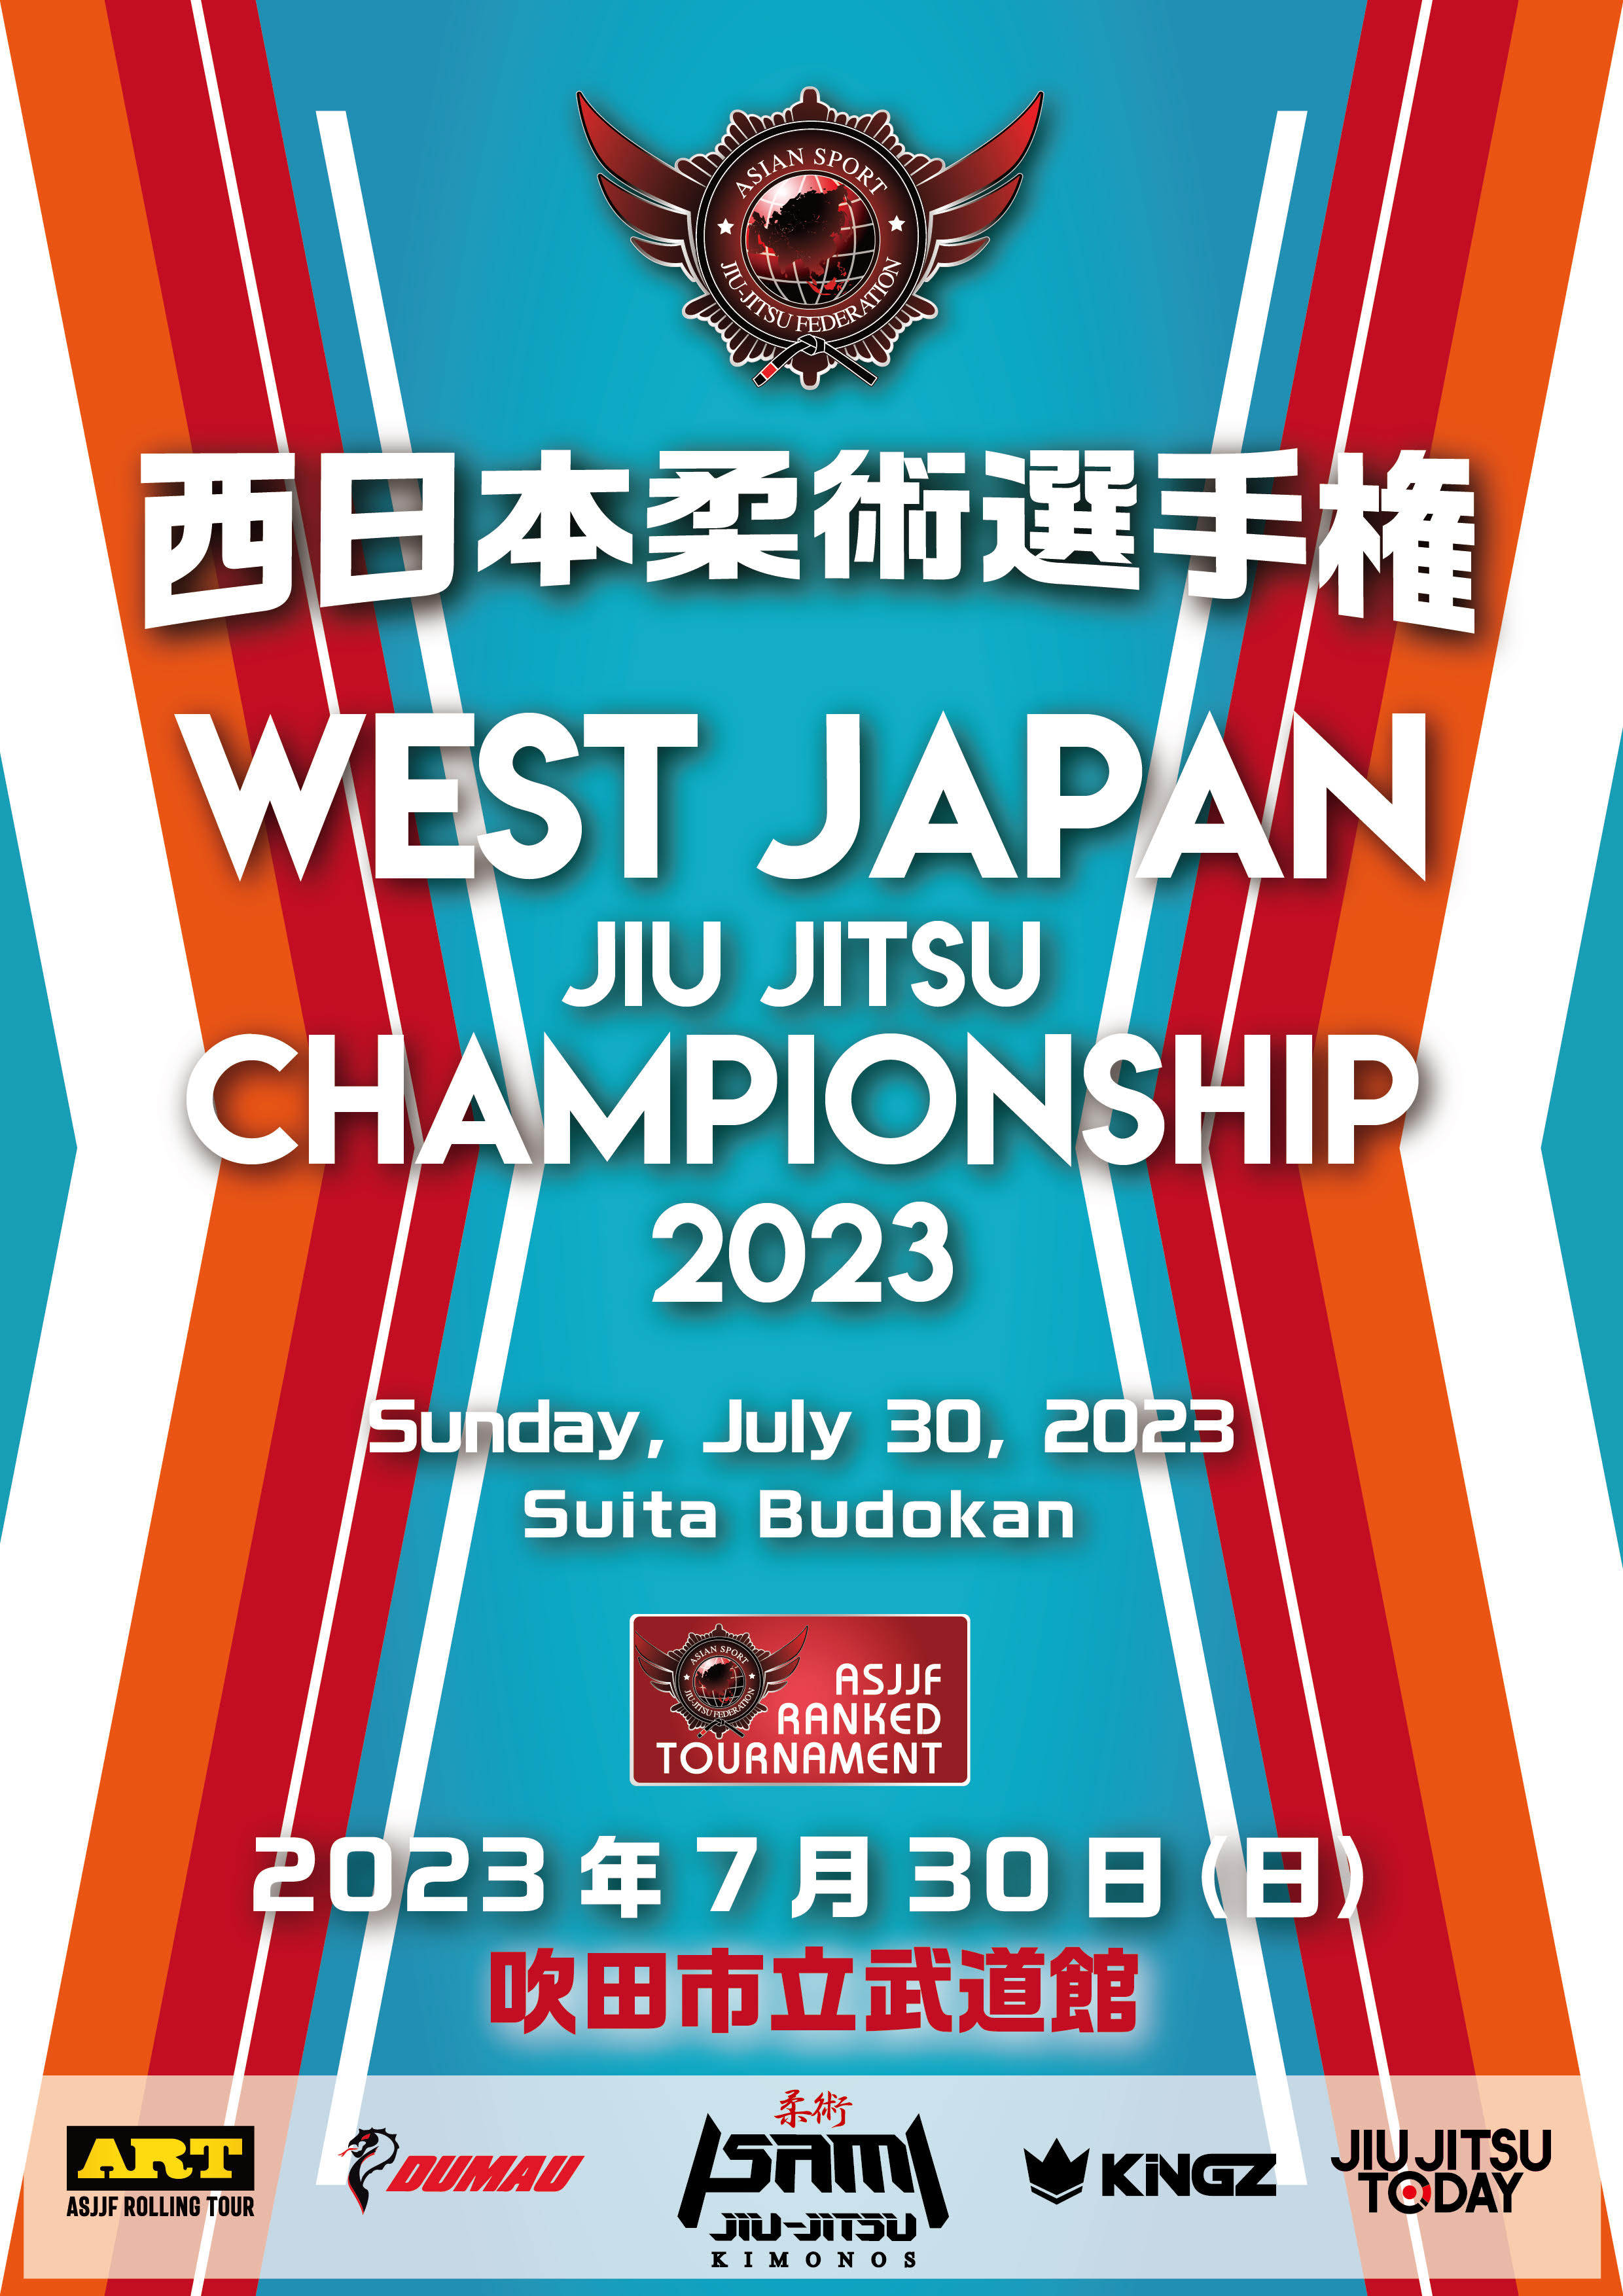 West Japan Jiu Jitsu Championship 2023